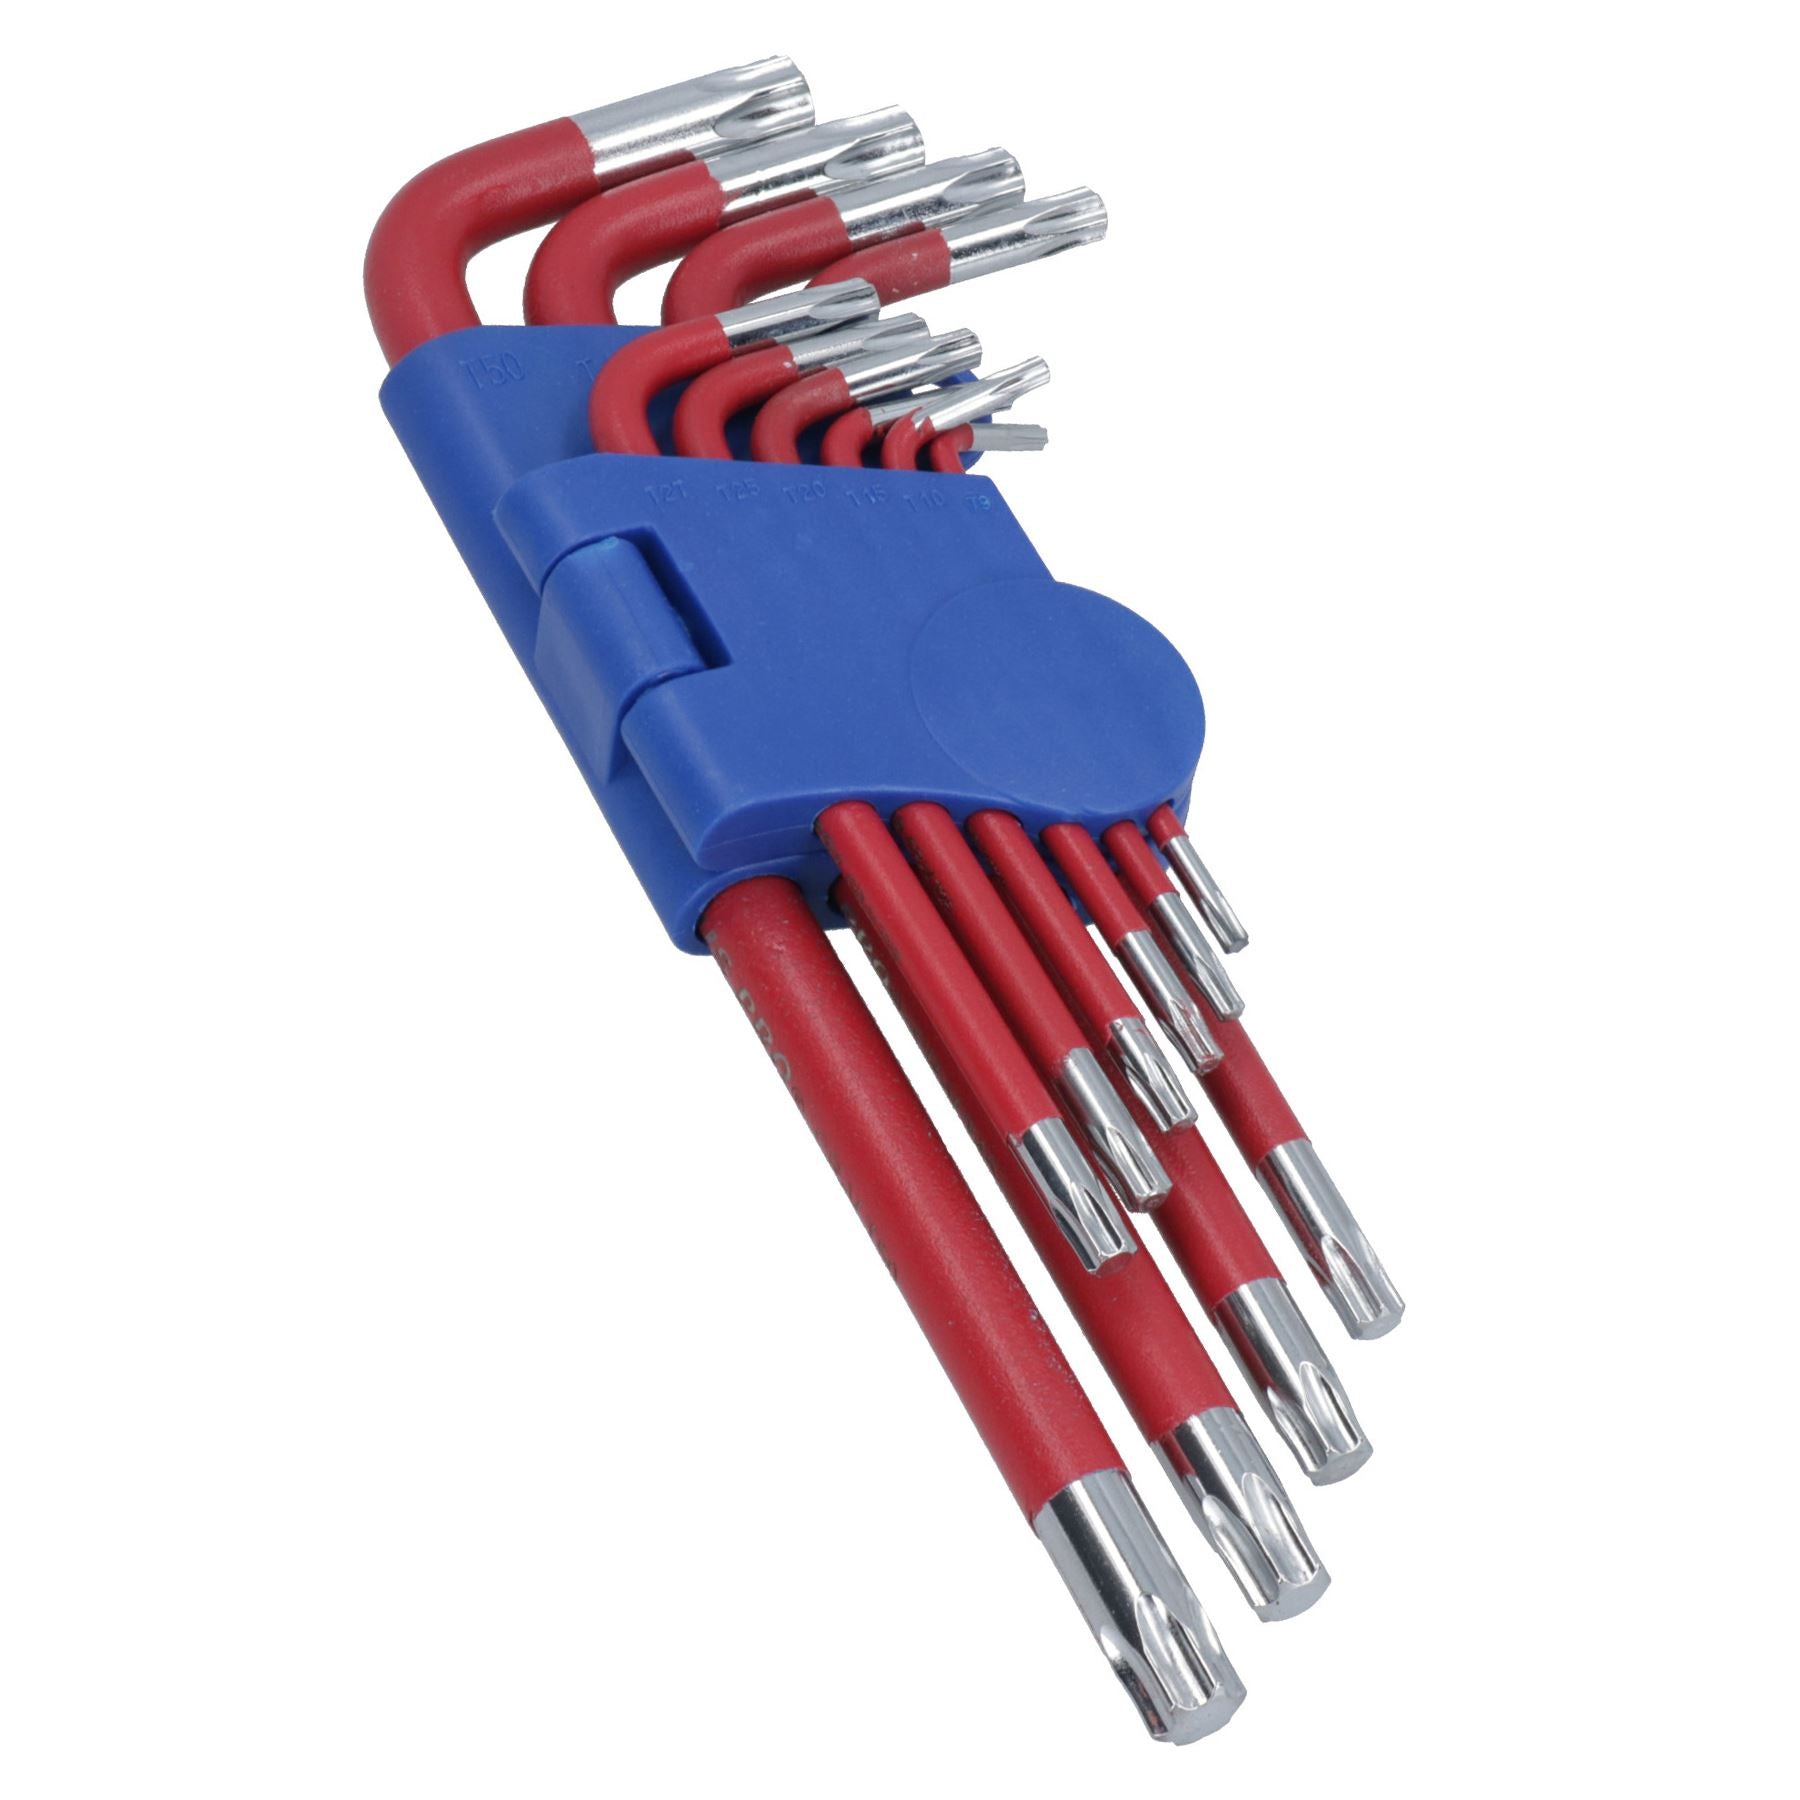 10pc Coloured Long Torx Star keys with Holder T9 – T50 Anti Slip Grip Covering